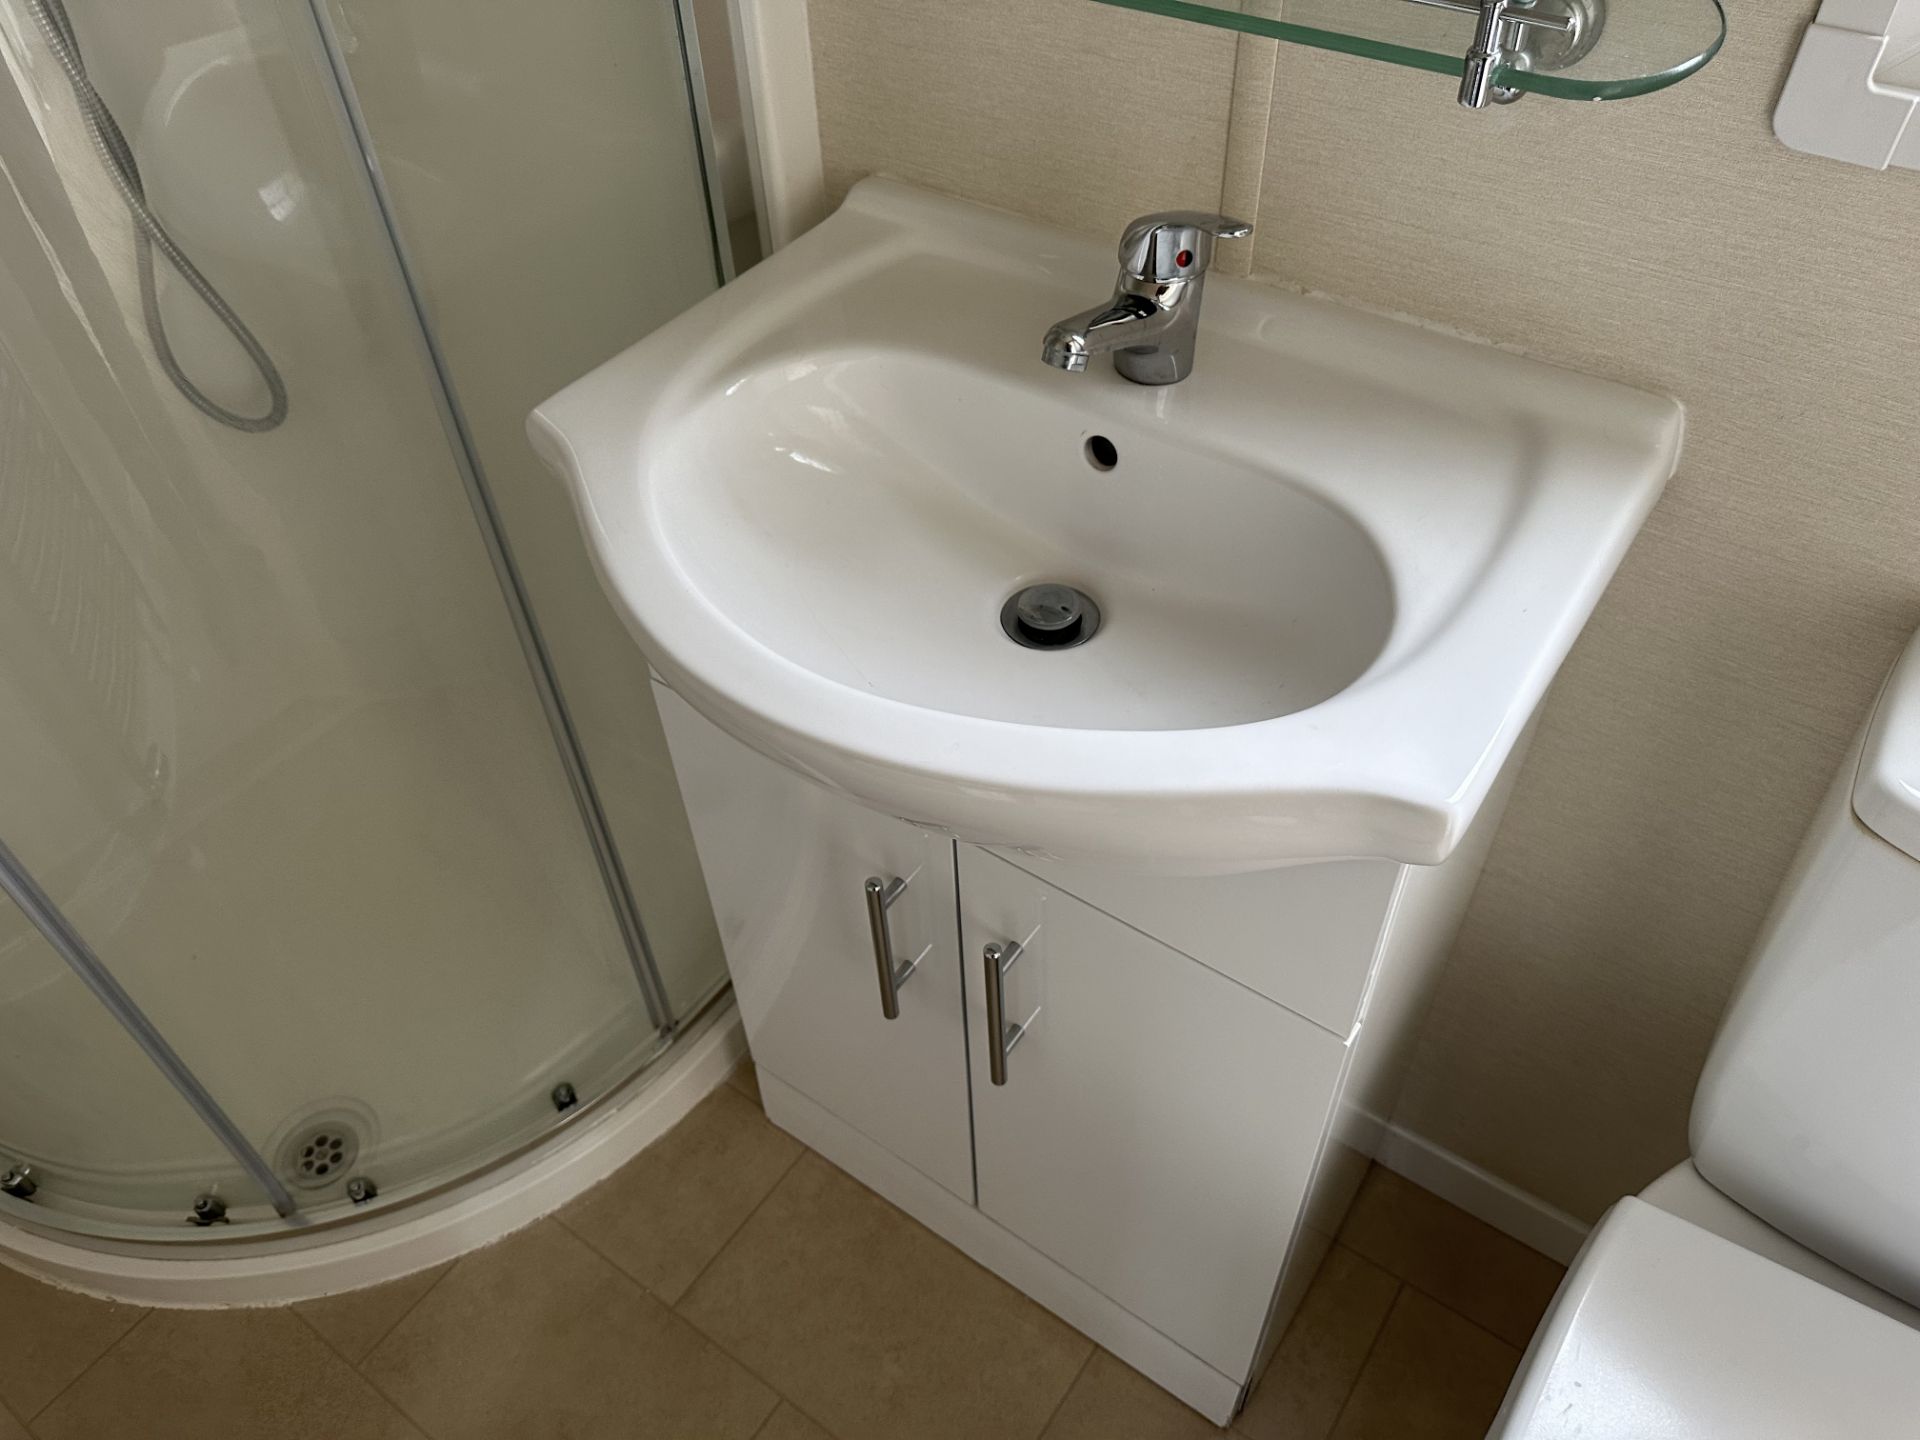 European Mobile Home '2022 Model' 36x14 Ruby Edition - 2 Bedroom - Bathroom - Image 32 of 46